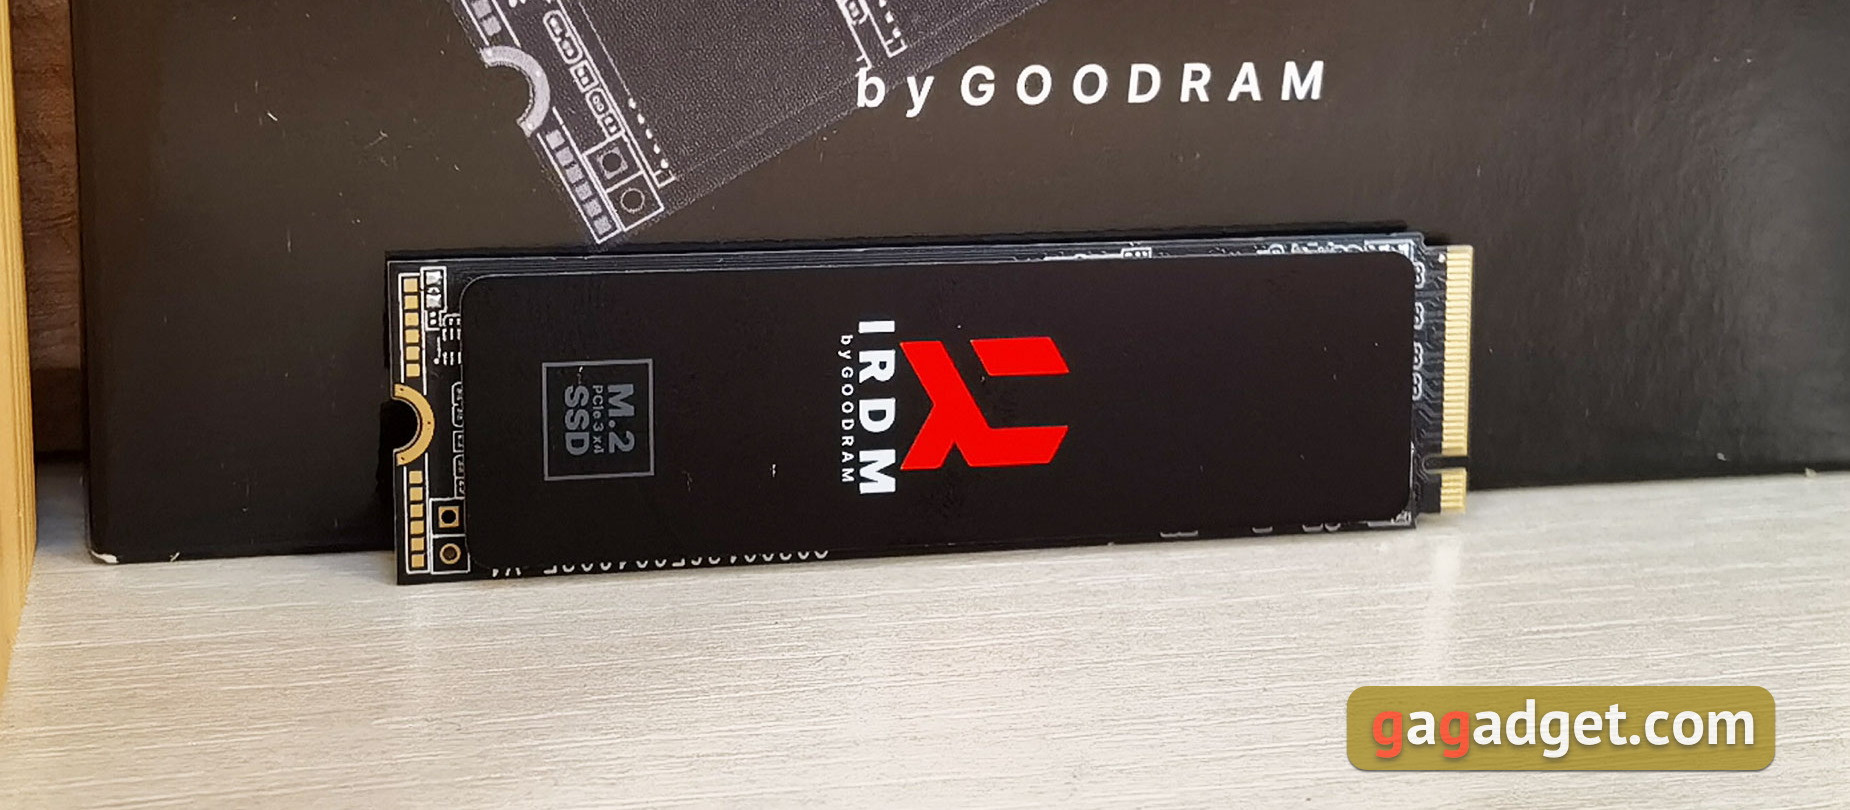 Kioxia EXCERIA PLUS 500 Go SSD NVMe M.2 2280